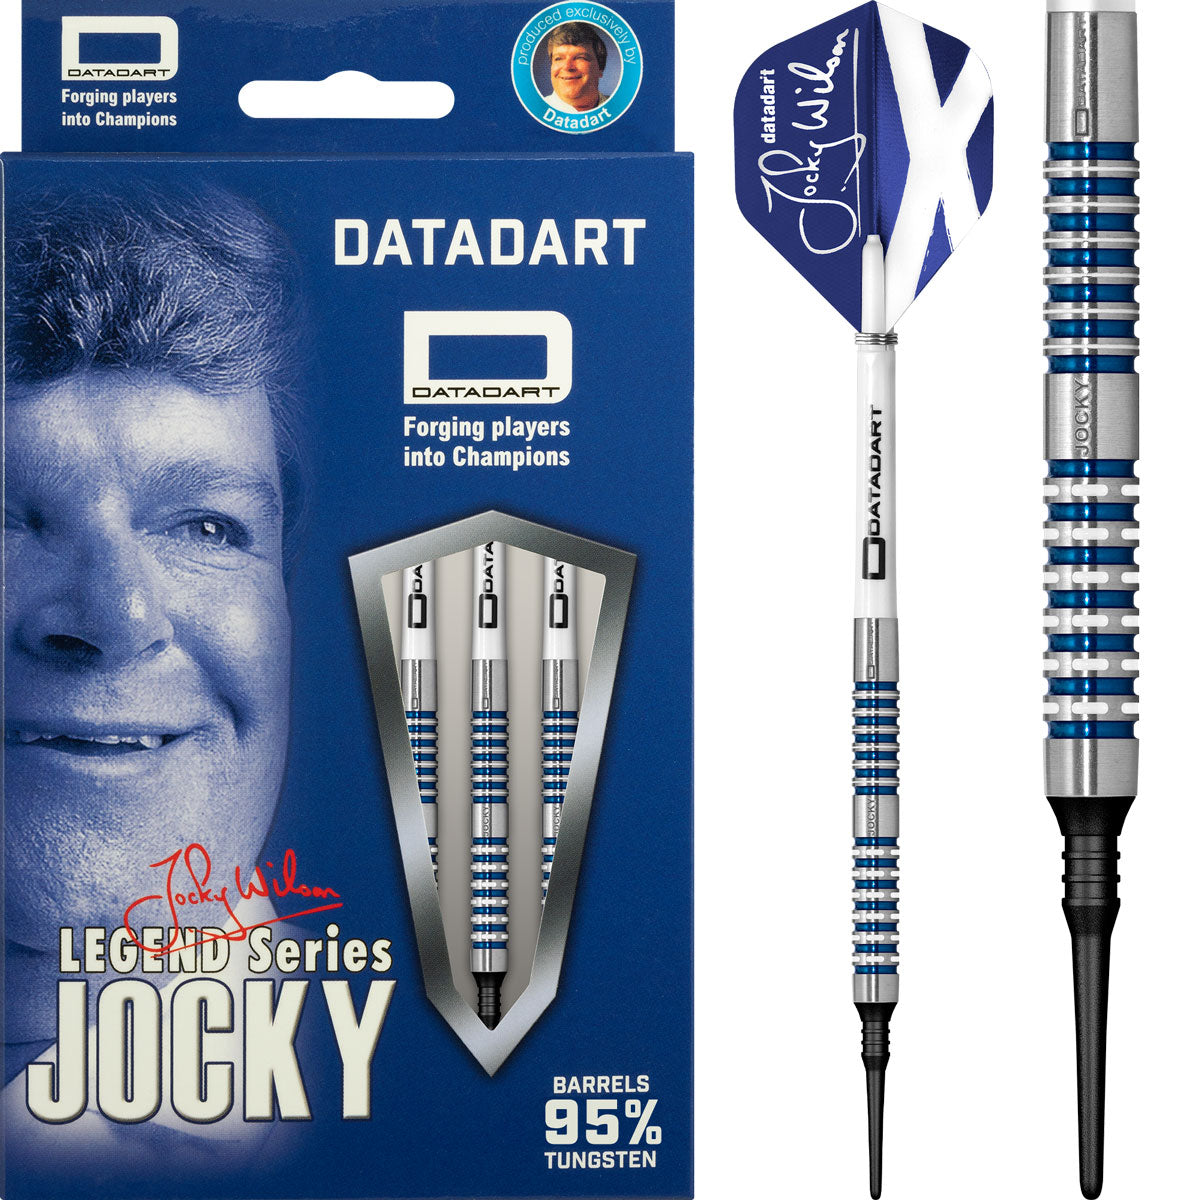 Datadart Jocky Wilson Legend Soft Tip Darts 18g - 95% Tungsten